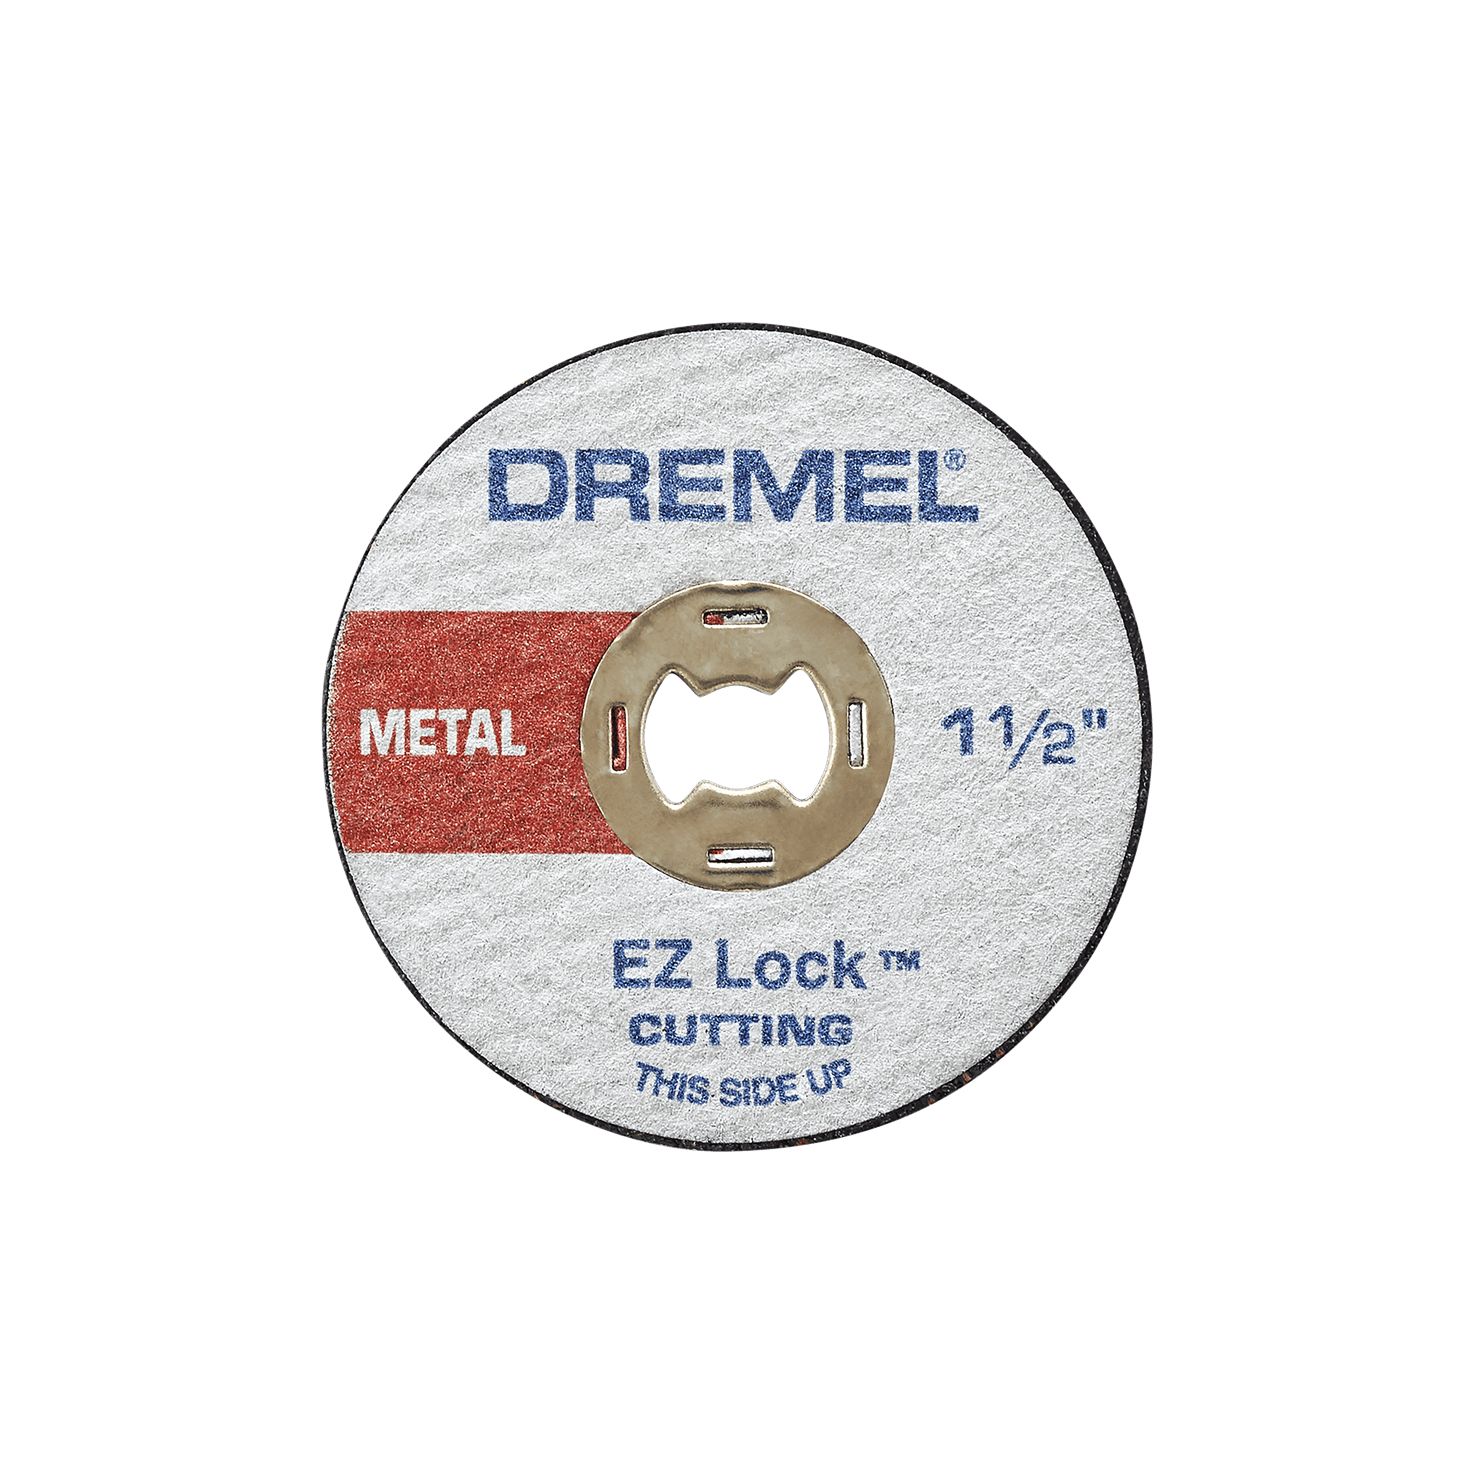 Dremel 8220 12VMax Cordless Rotary Tool Tool Box Buzz